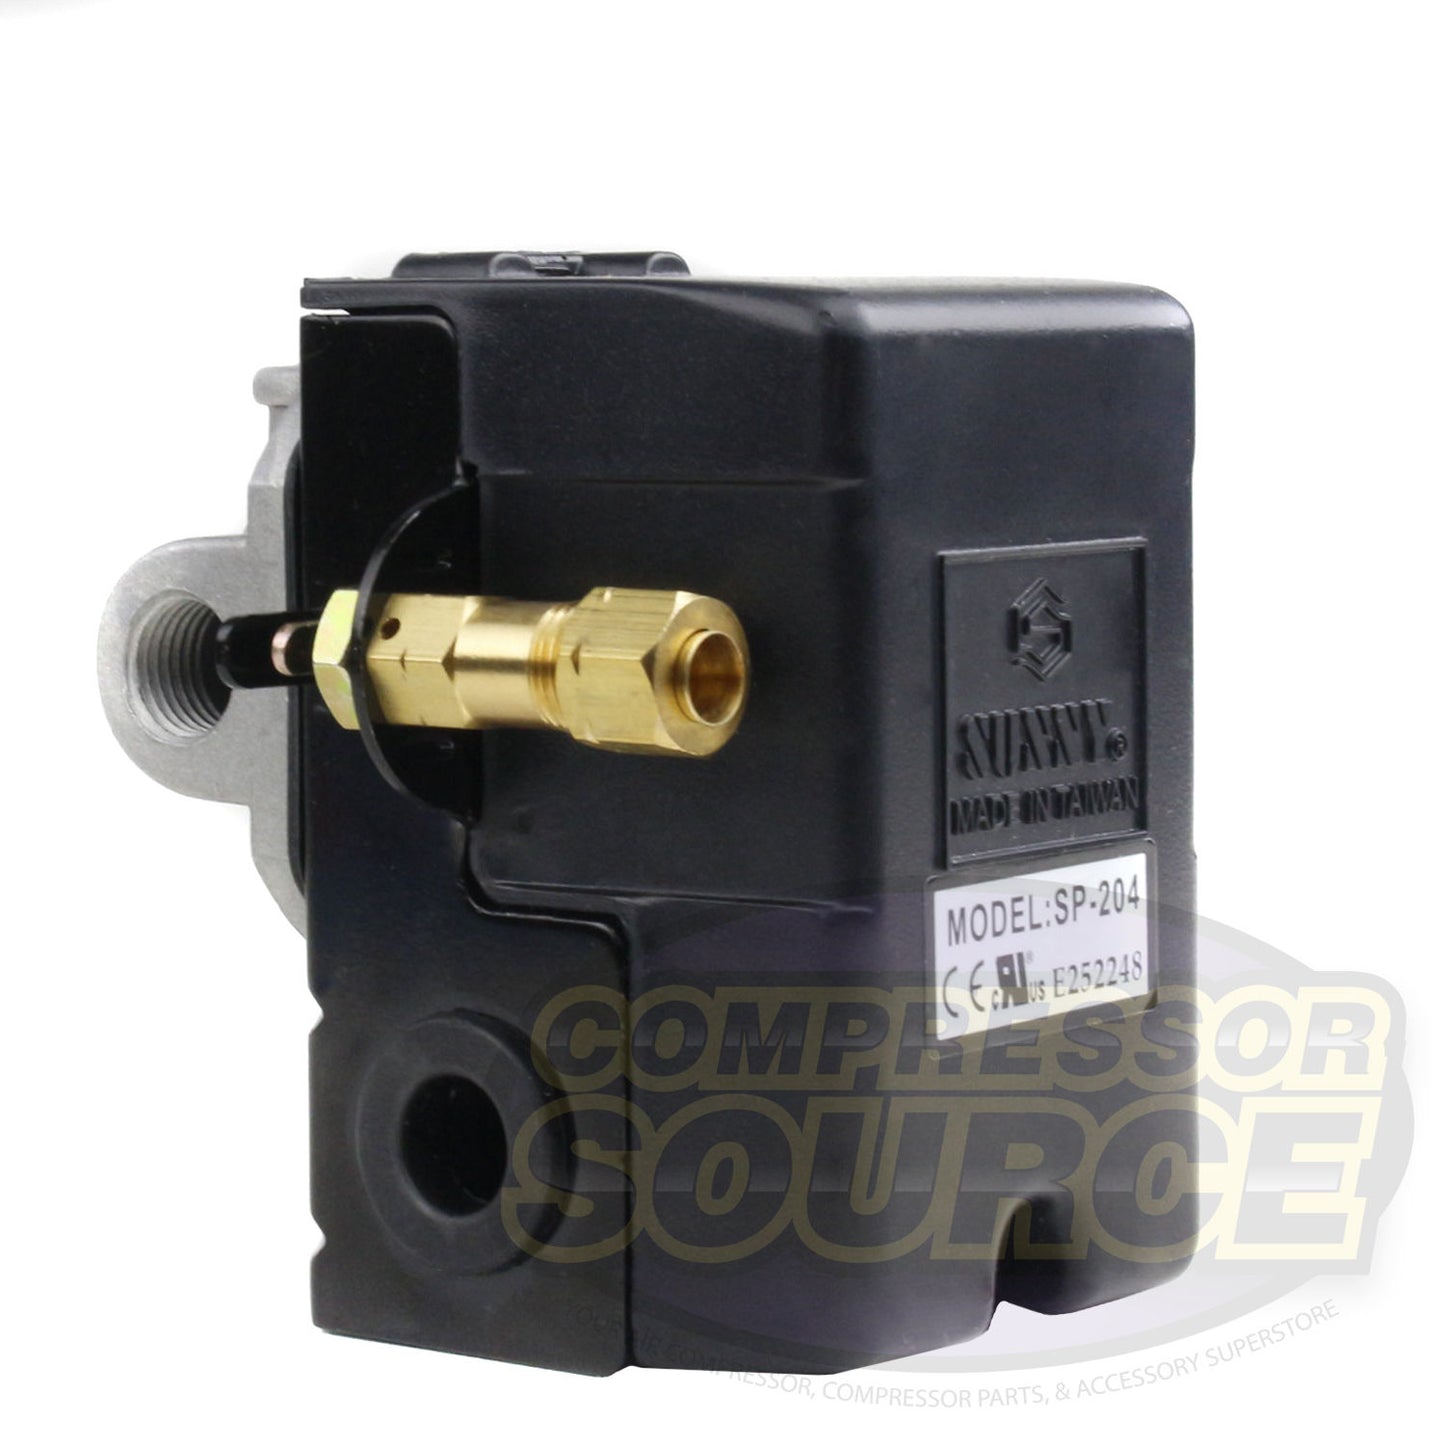 4 Port 25 Amp 105-135 PSI Heavy Duty Amp Pressure Switch